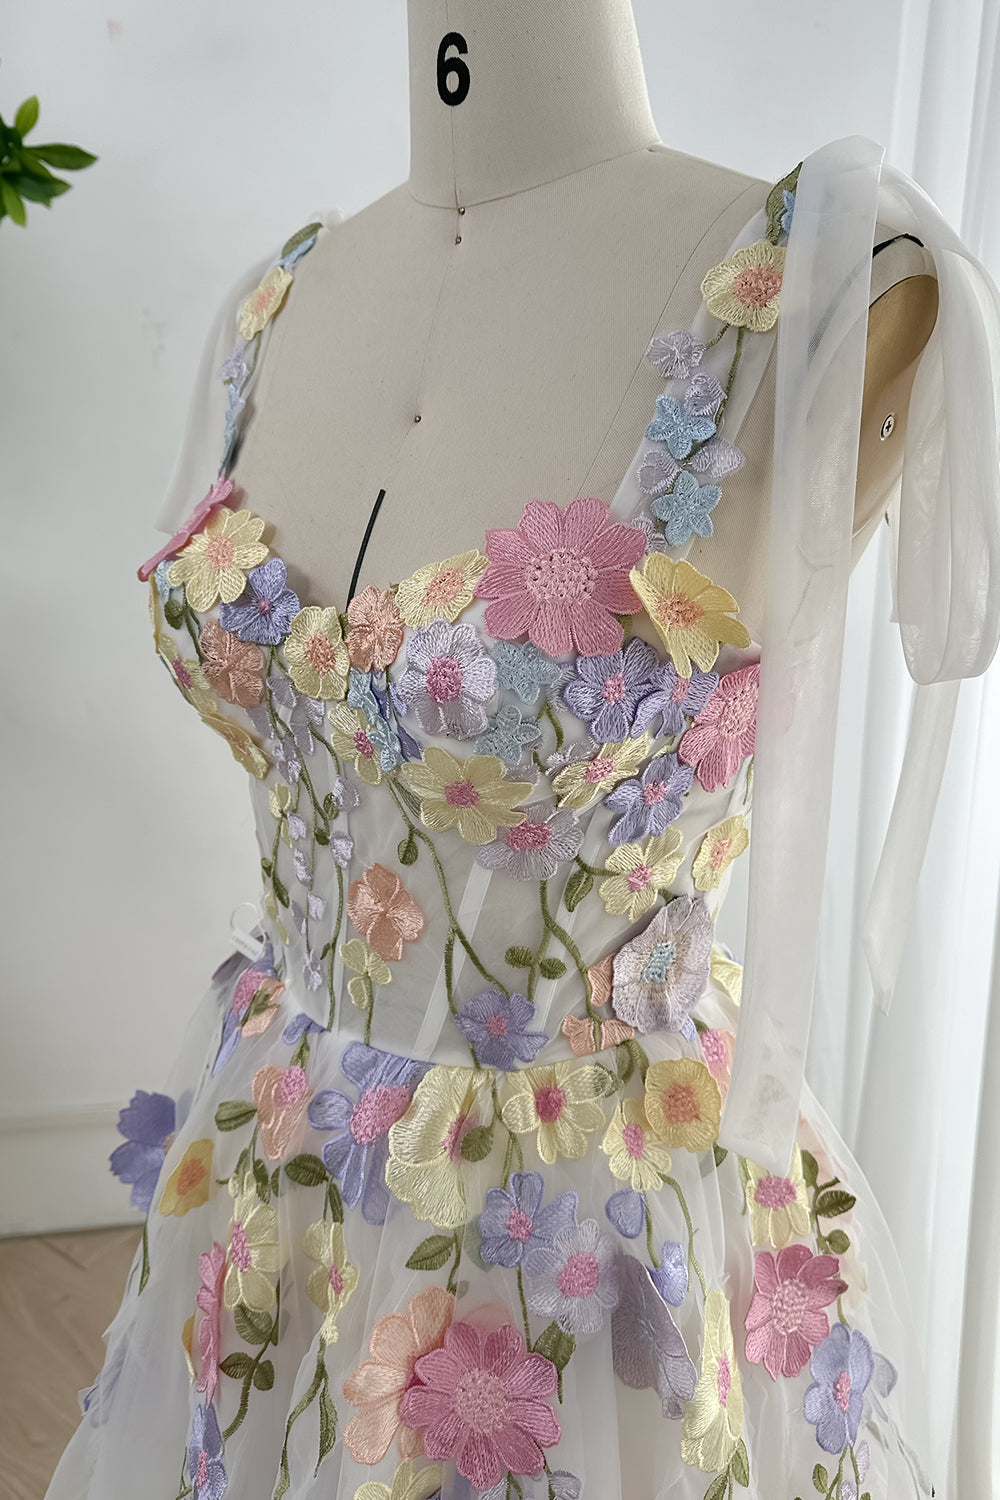 MissJophiel Embroidery Floral Corset Ivory Dress with Removable Tie Straps